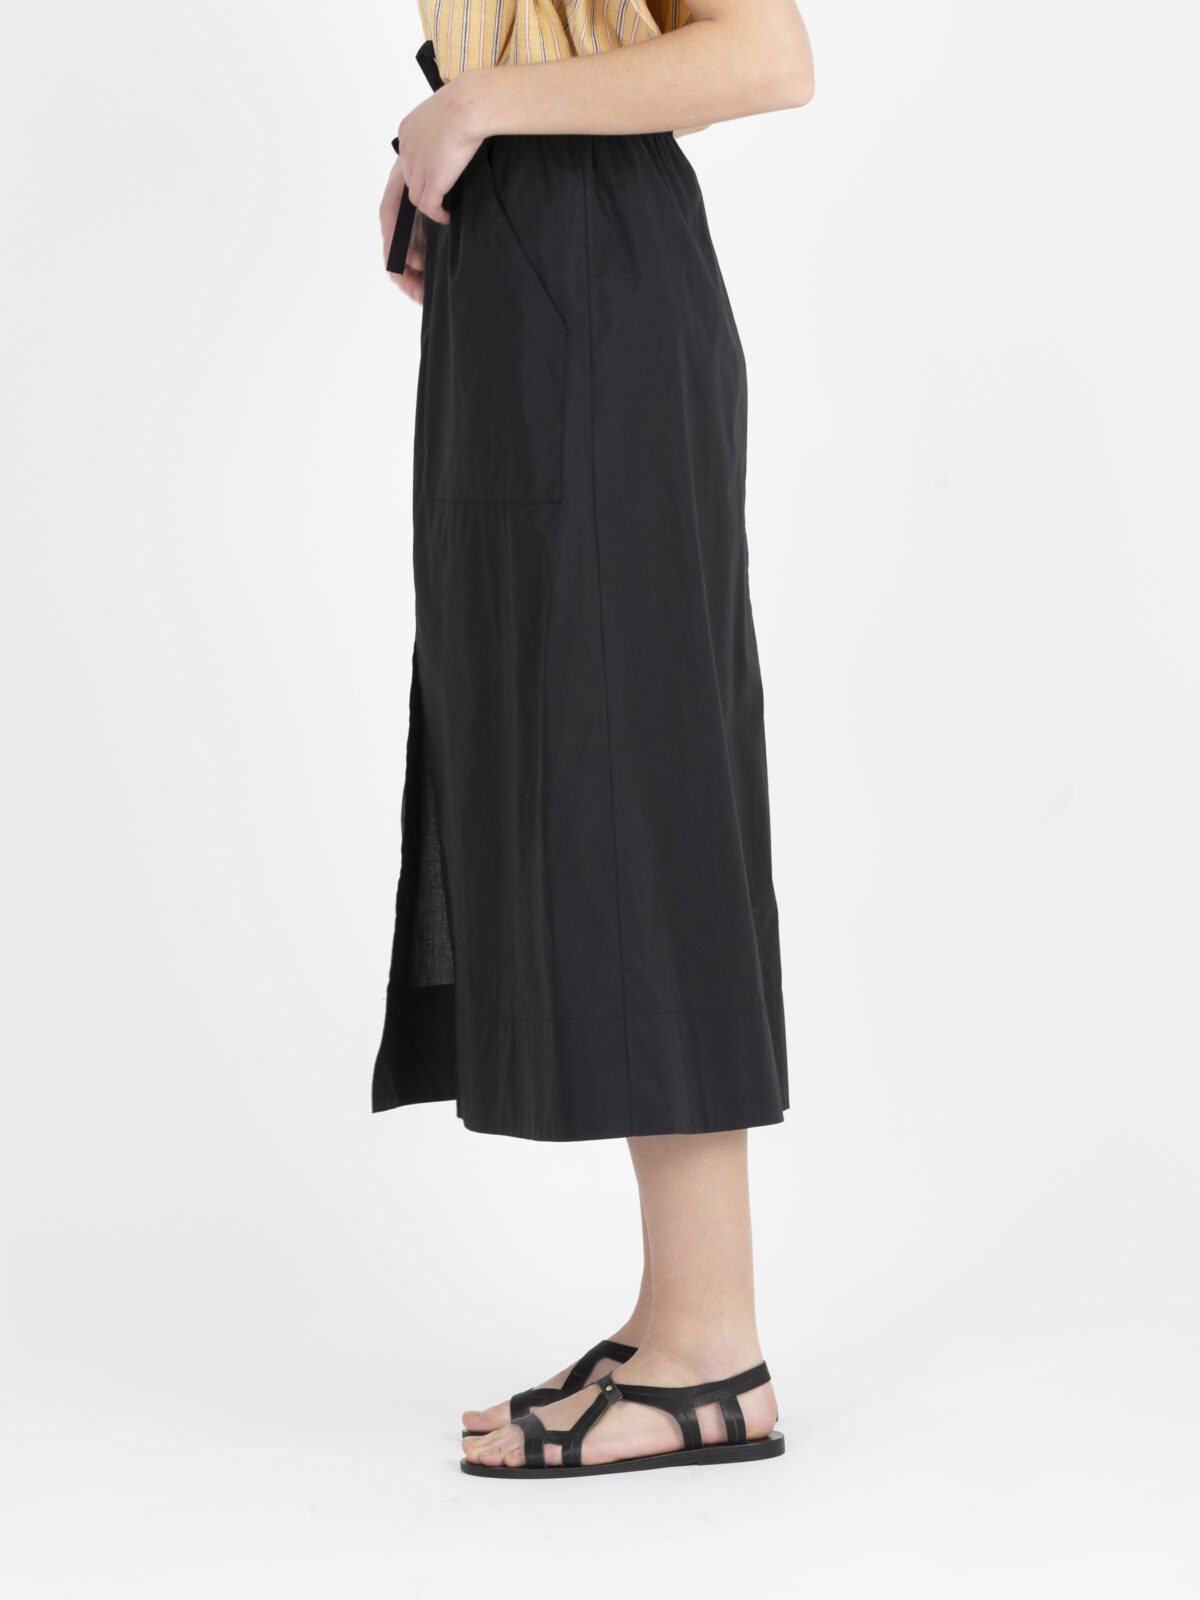 agadir-black-cotton-popline-skirt-maxi-slit-elastic-band-soeur-matchboxathens